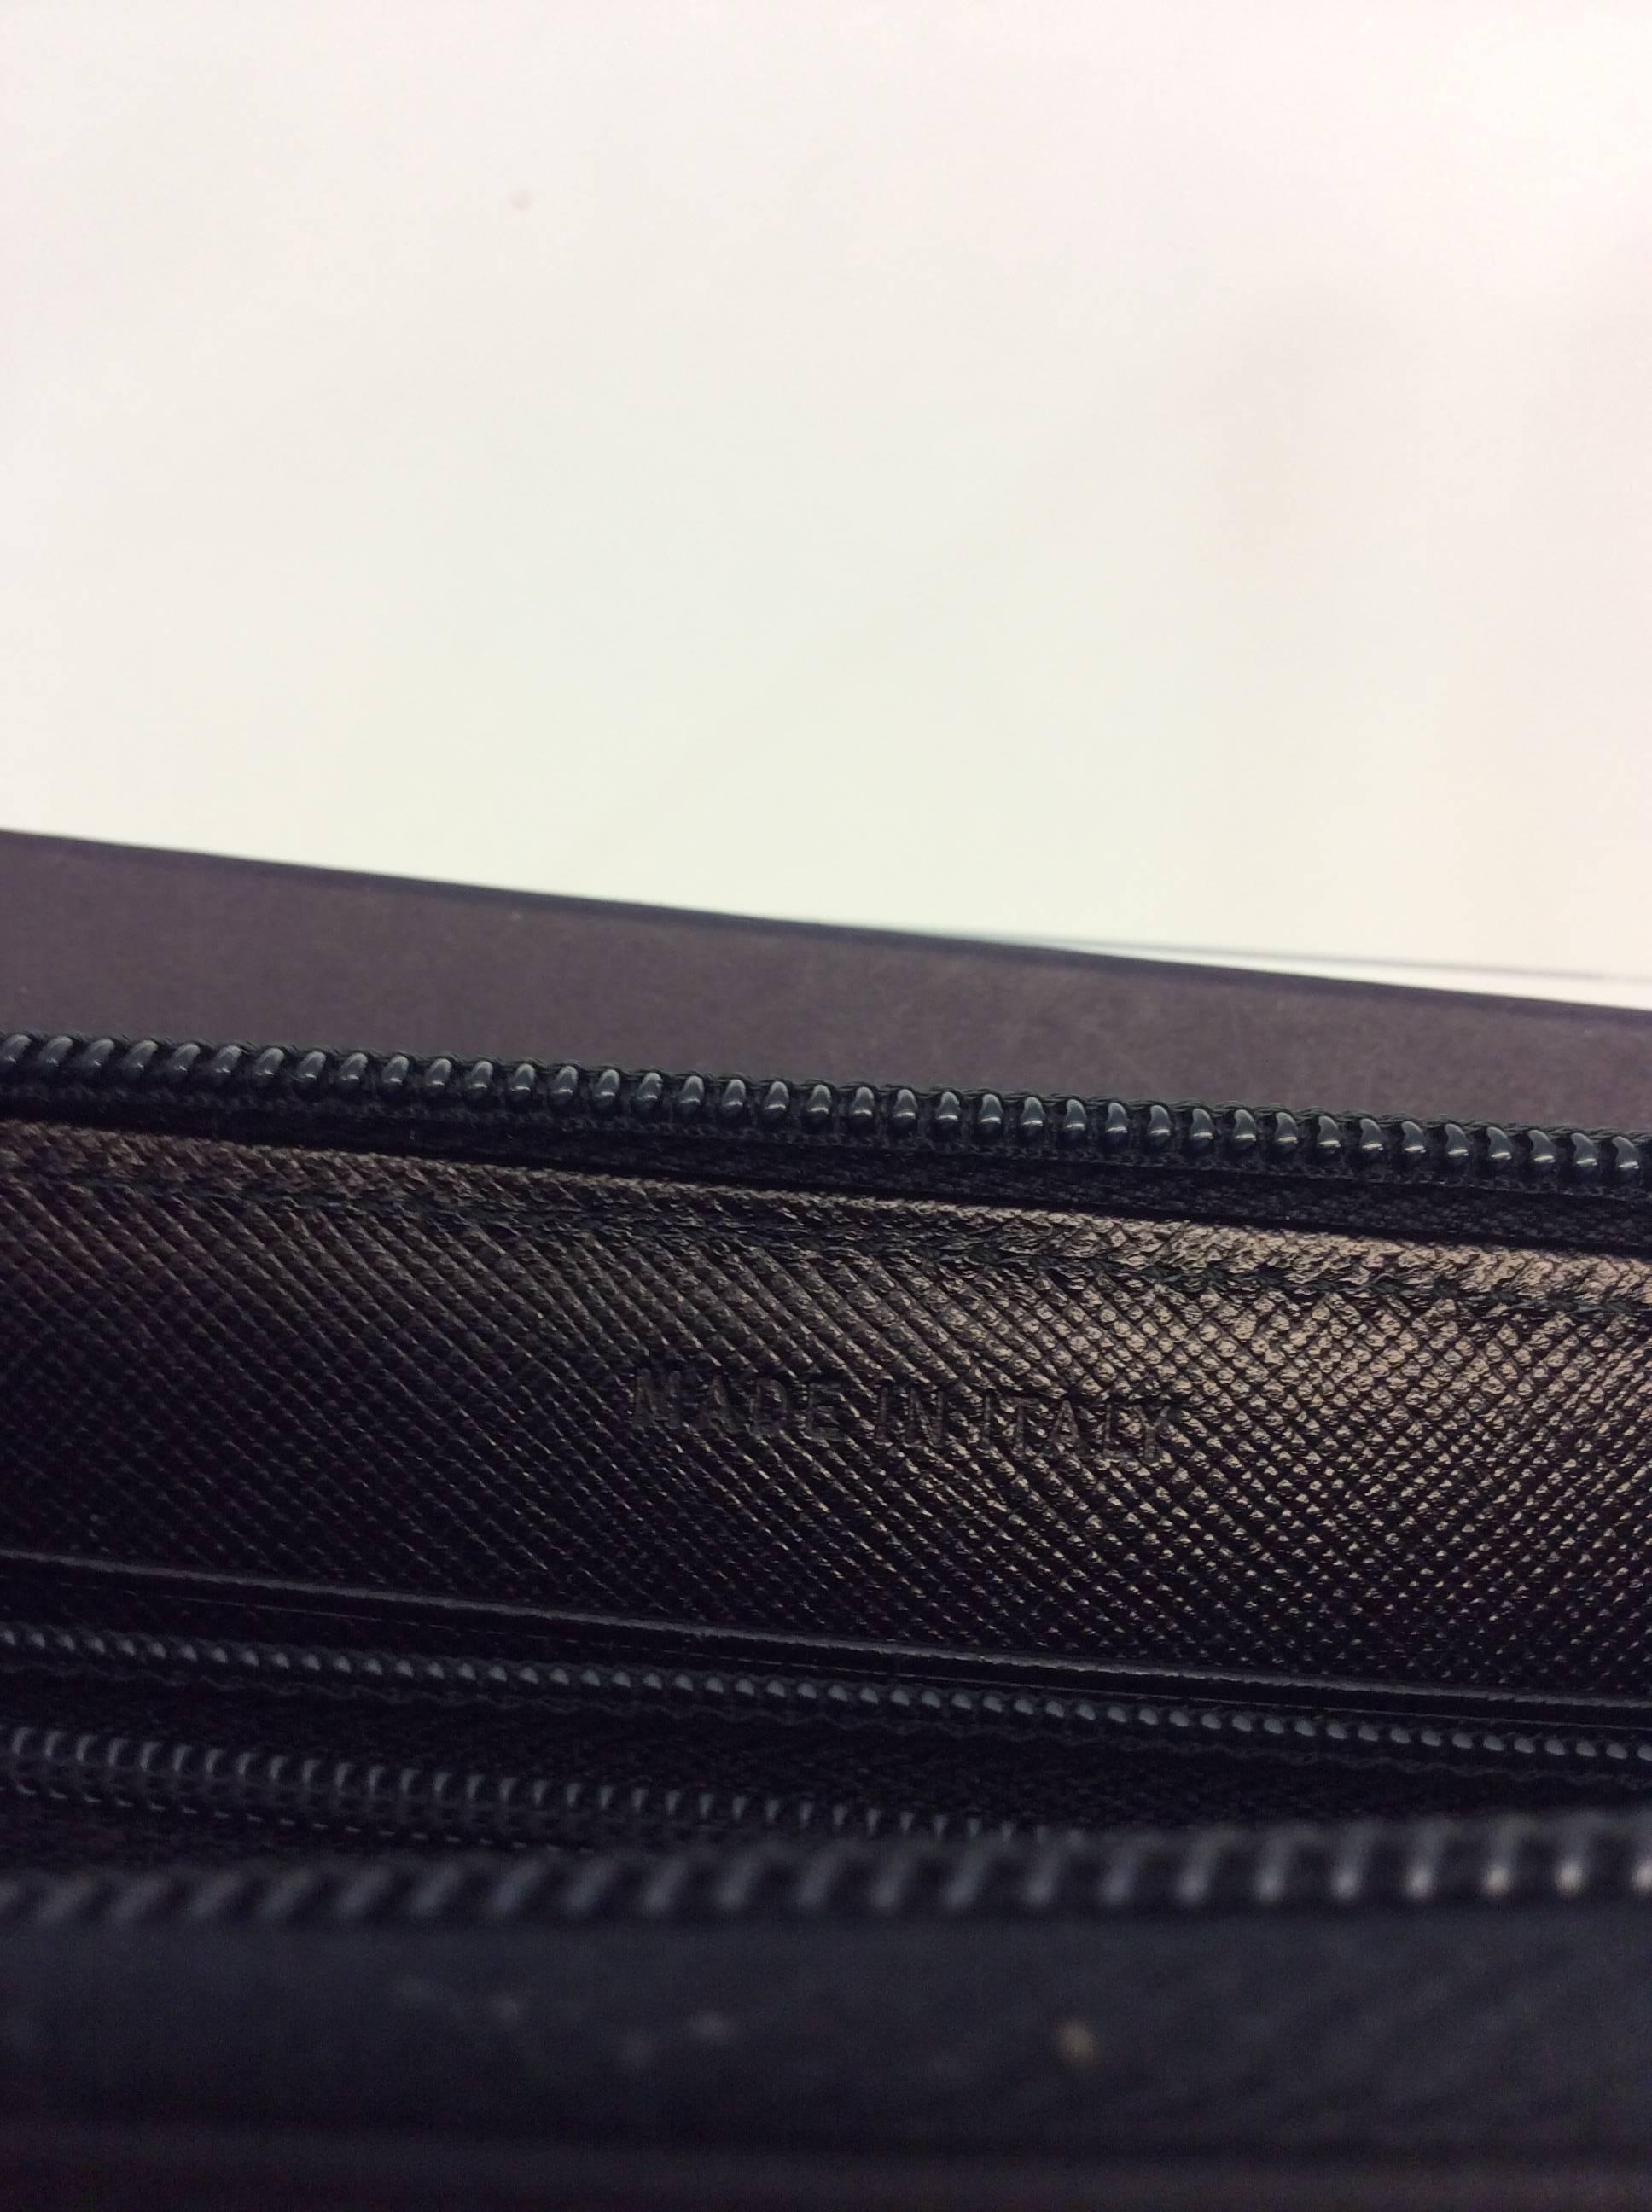 Prada Black Nylon Zip Wallet For Sale 2